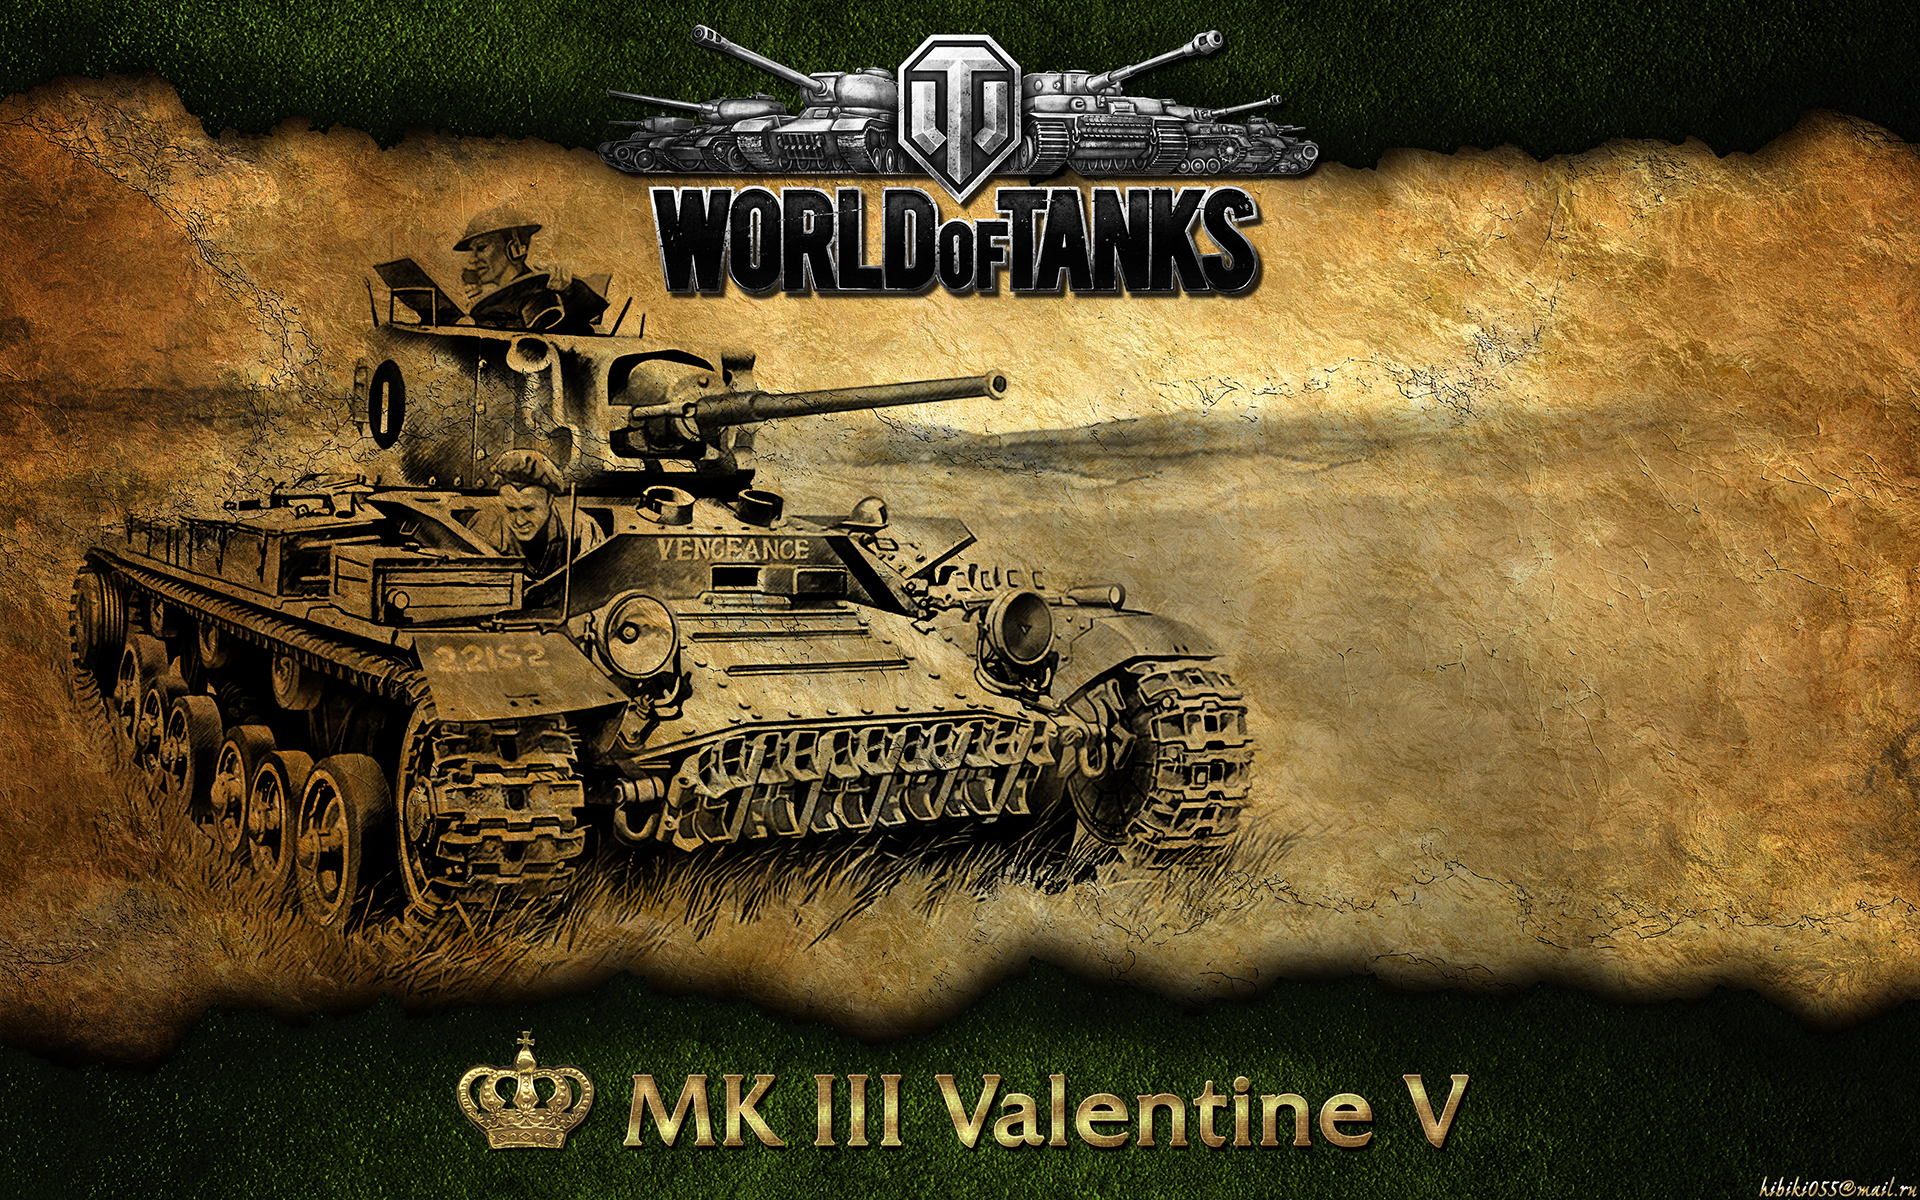 MK III Valentine V